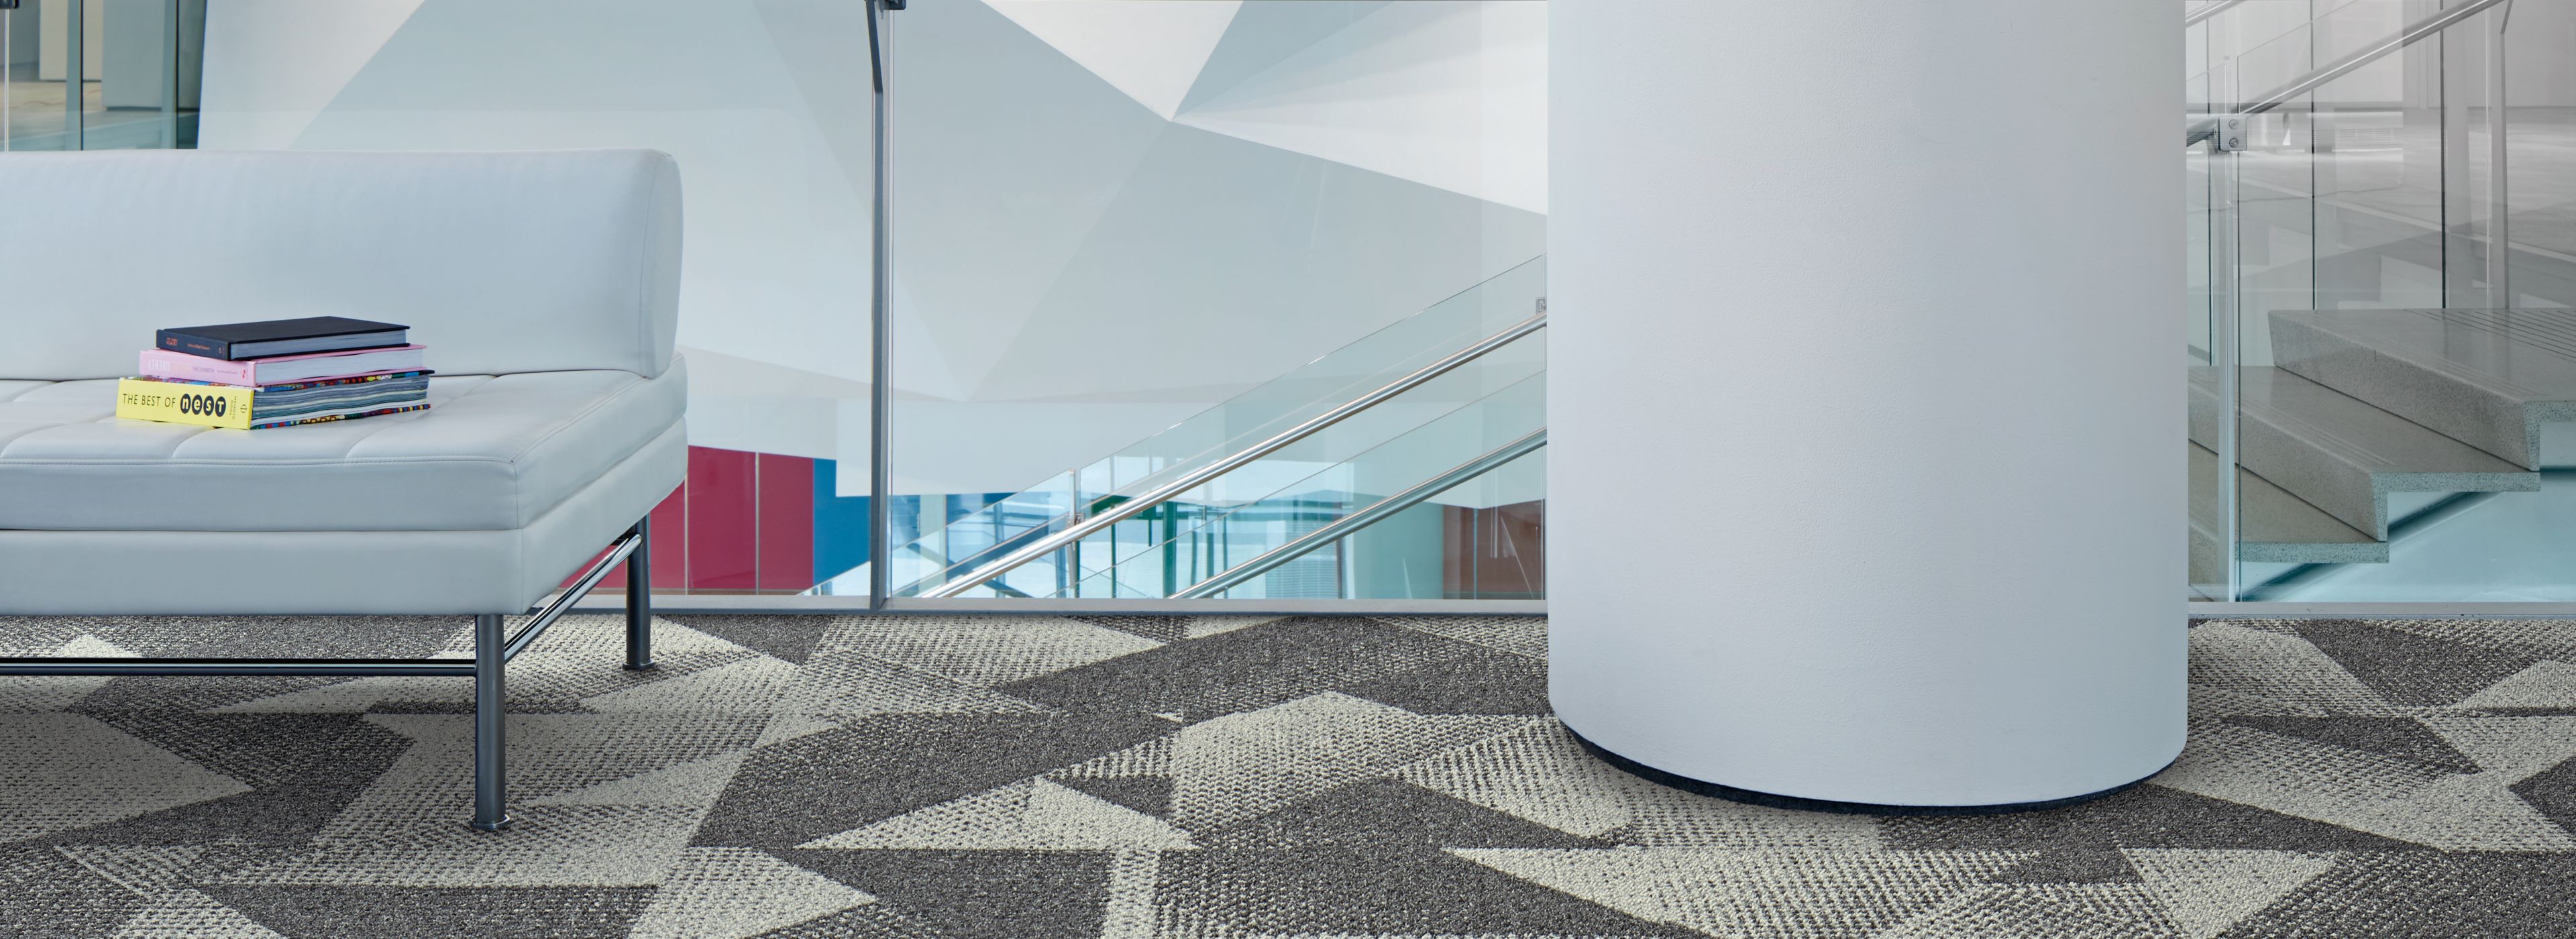 Interface Upward Bound carpet tile in office common area imagen número 1